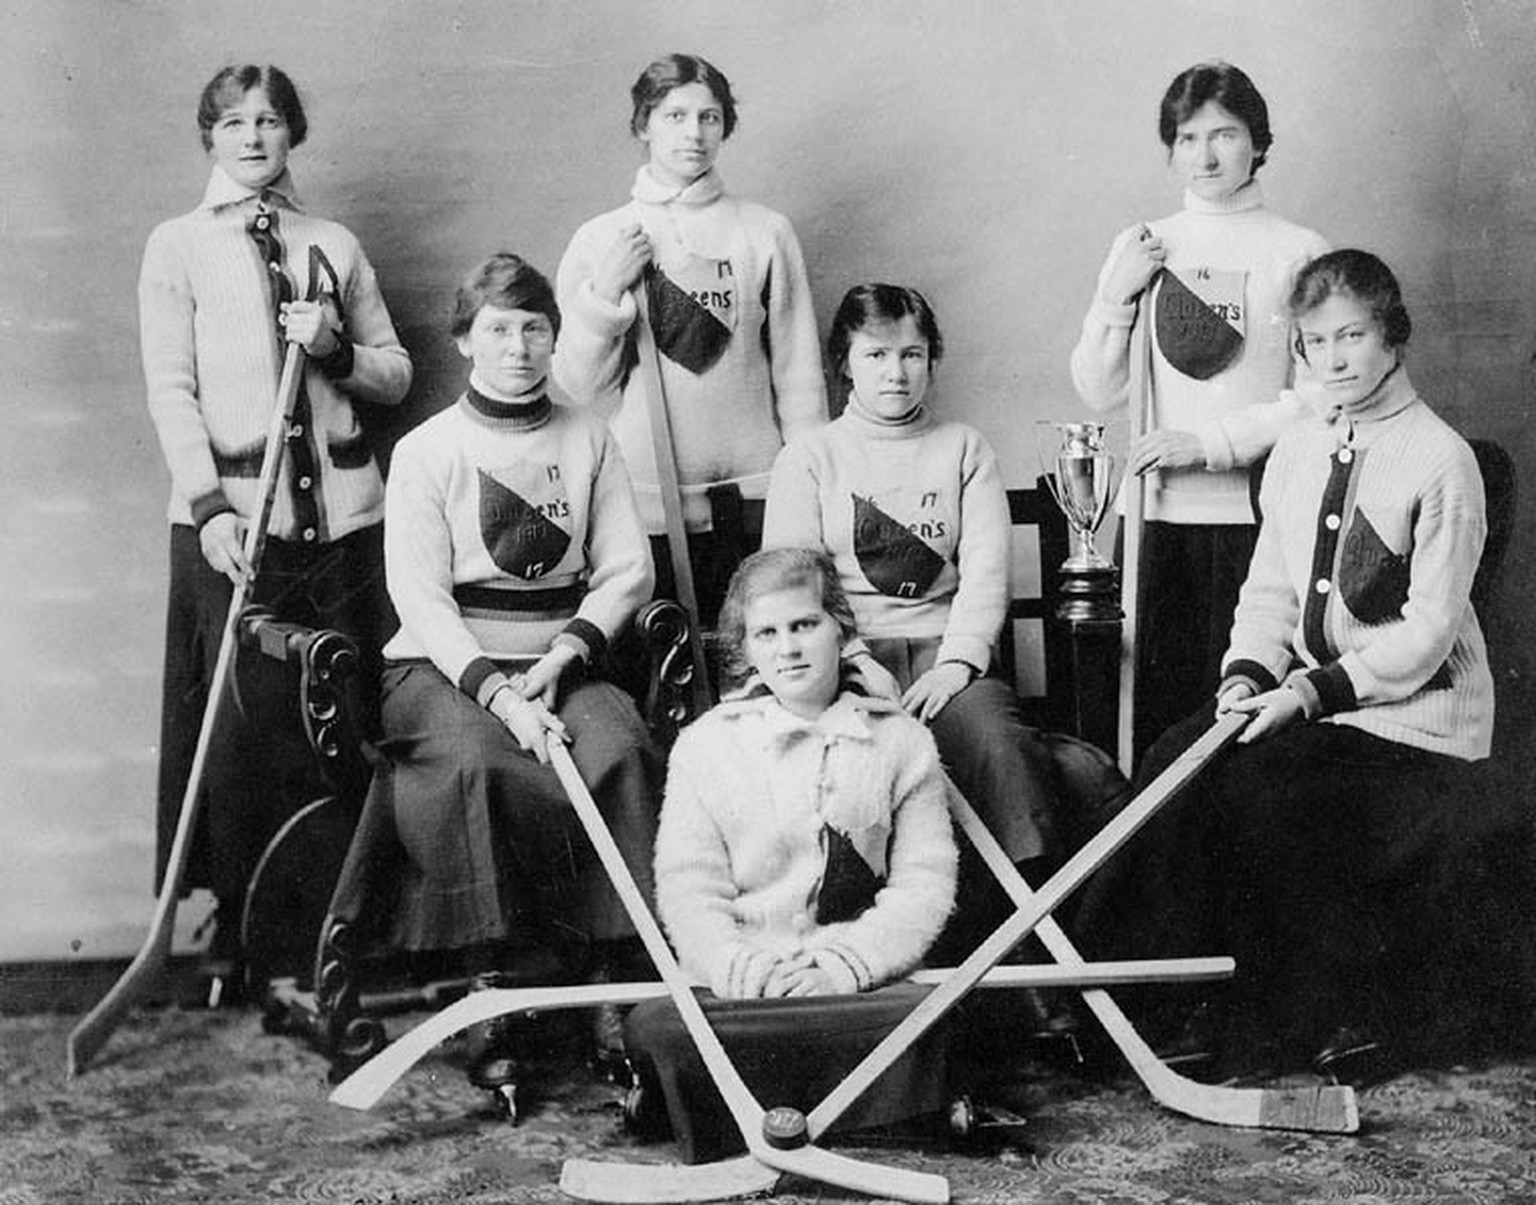 L’équipe de la Queen’s University de Kingston en Ontario (Canada), 1917.
https://commons.wikimedia.org/wiki/File:Queen%27s_U_hockey_team_1917.jpg